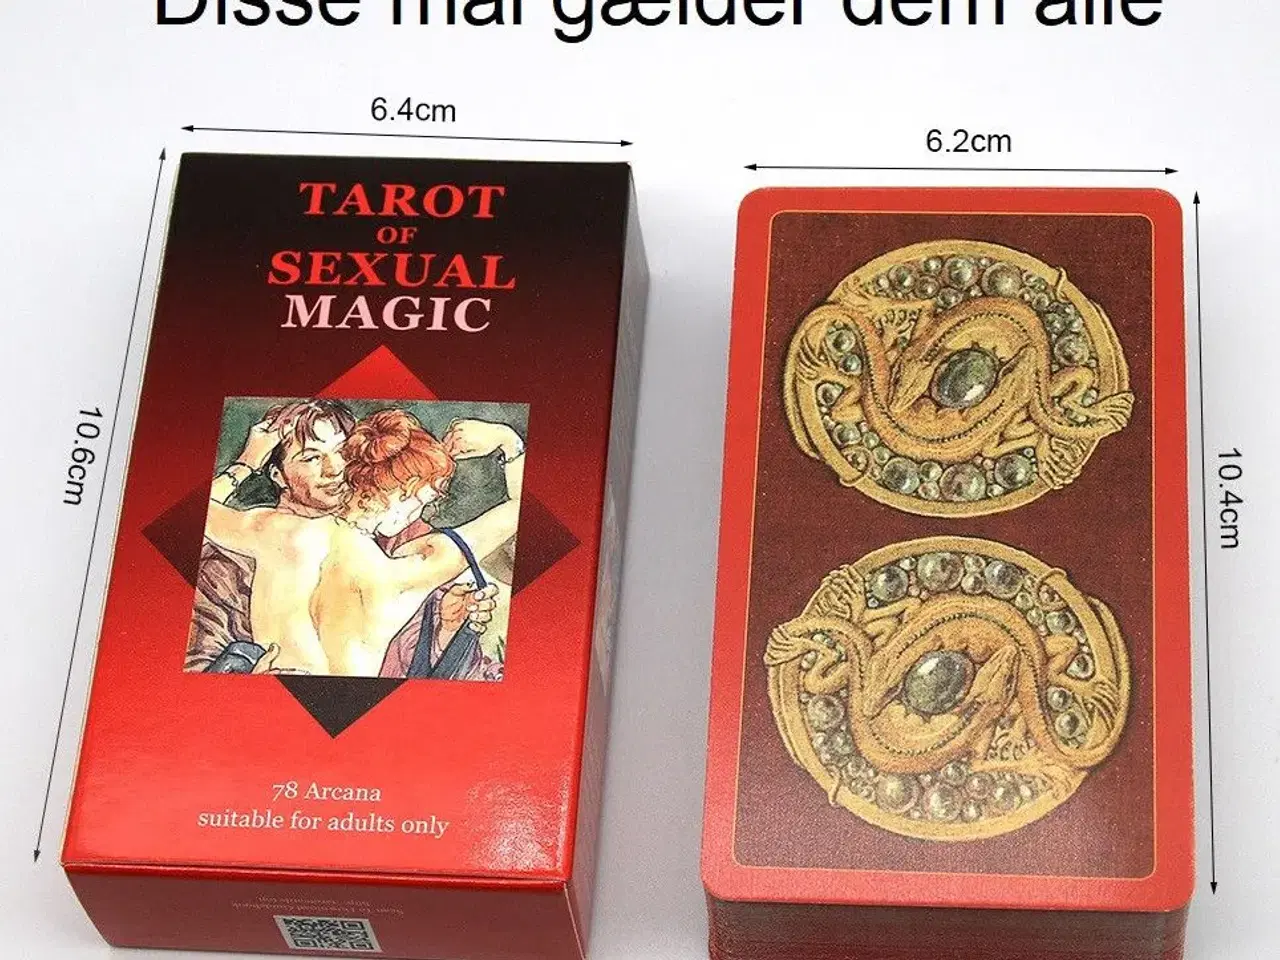 Billede 15 - Tarot kort med erotiske tegninger